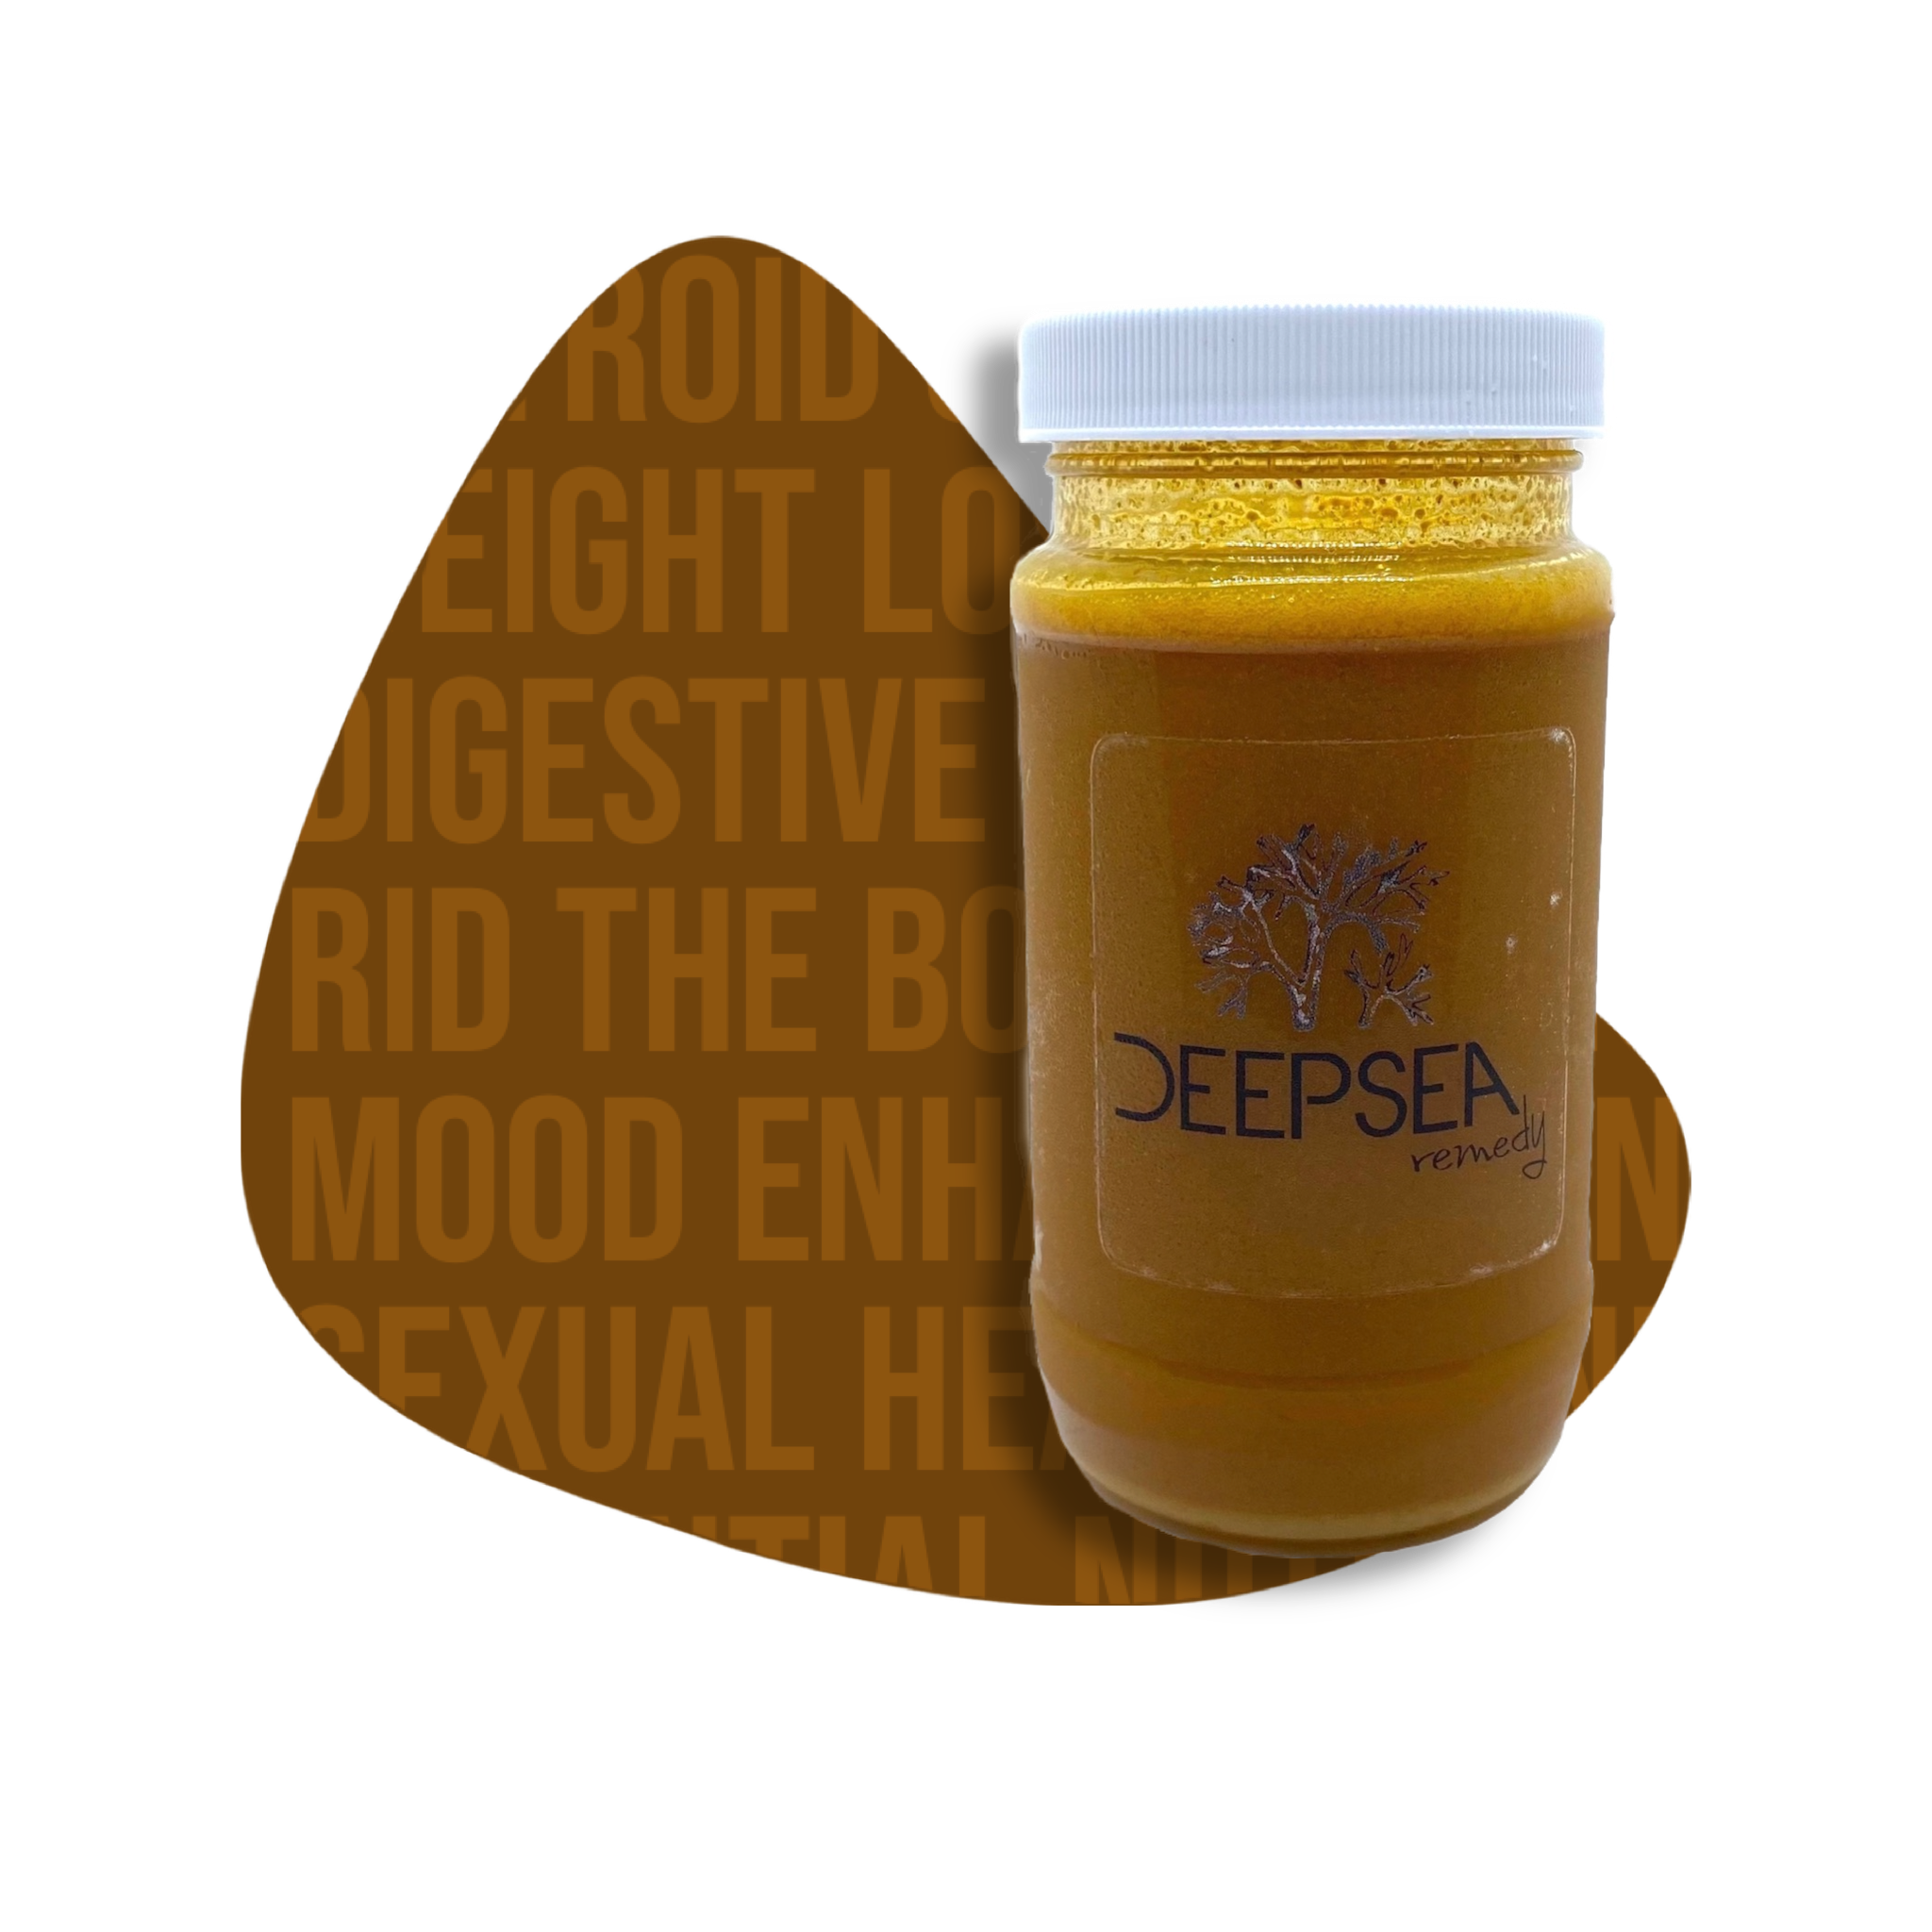 Liquid Gold (Turmeric Honey)